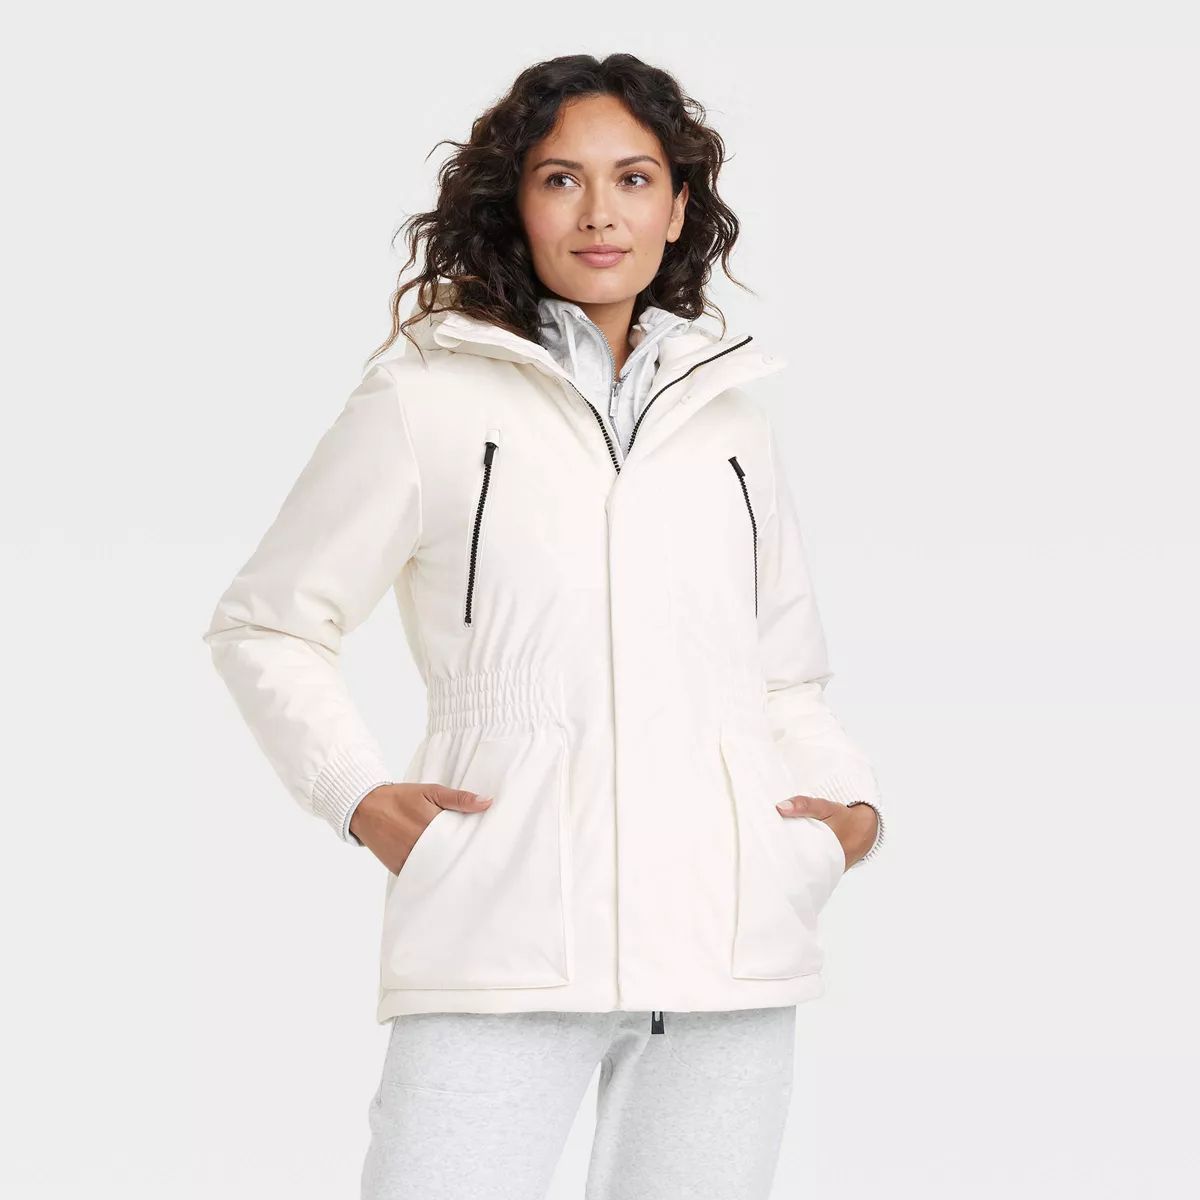 Women's Snowsport Jacket - All in Motion™ | Target